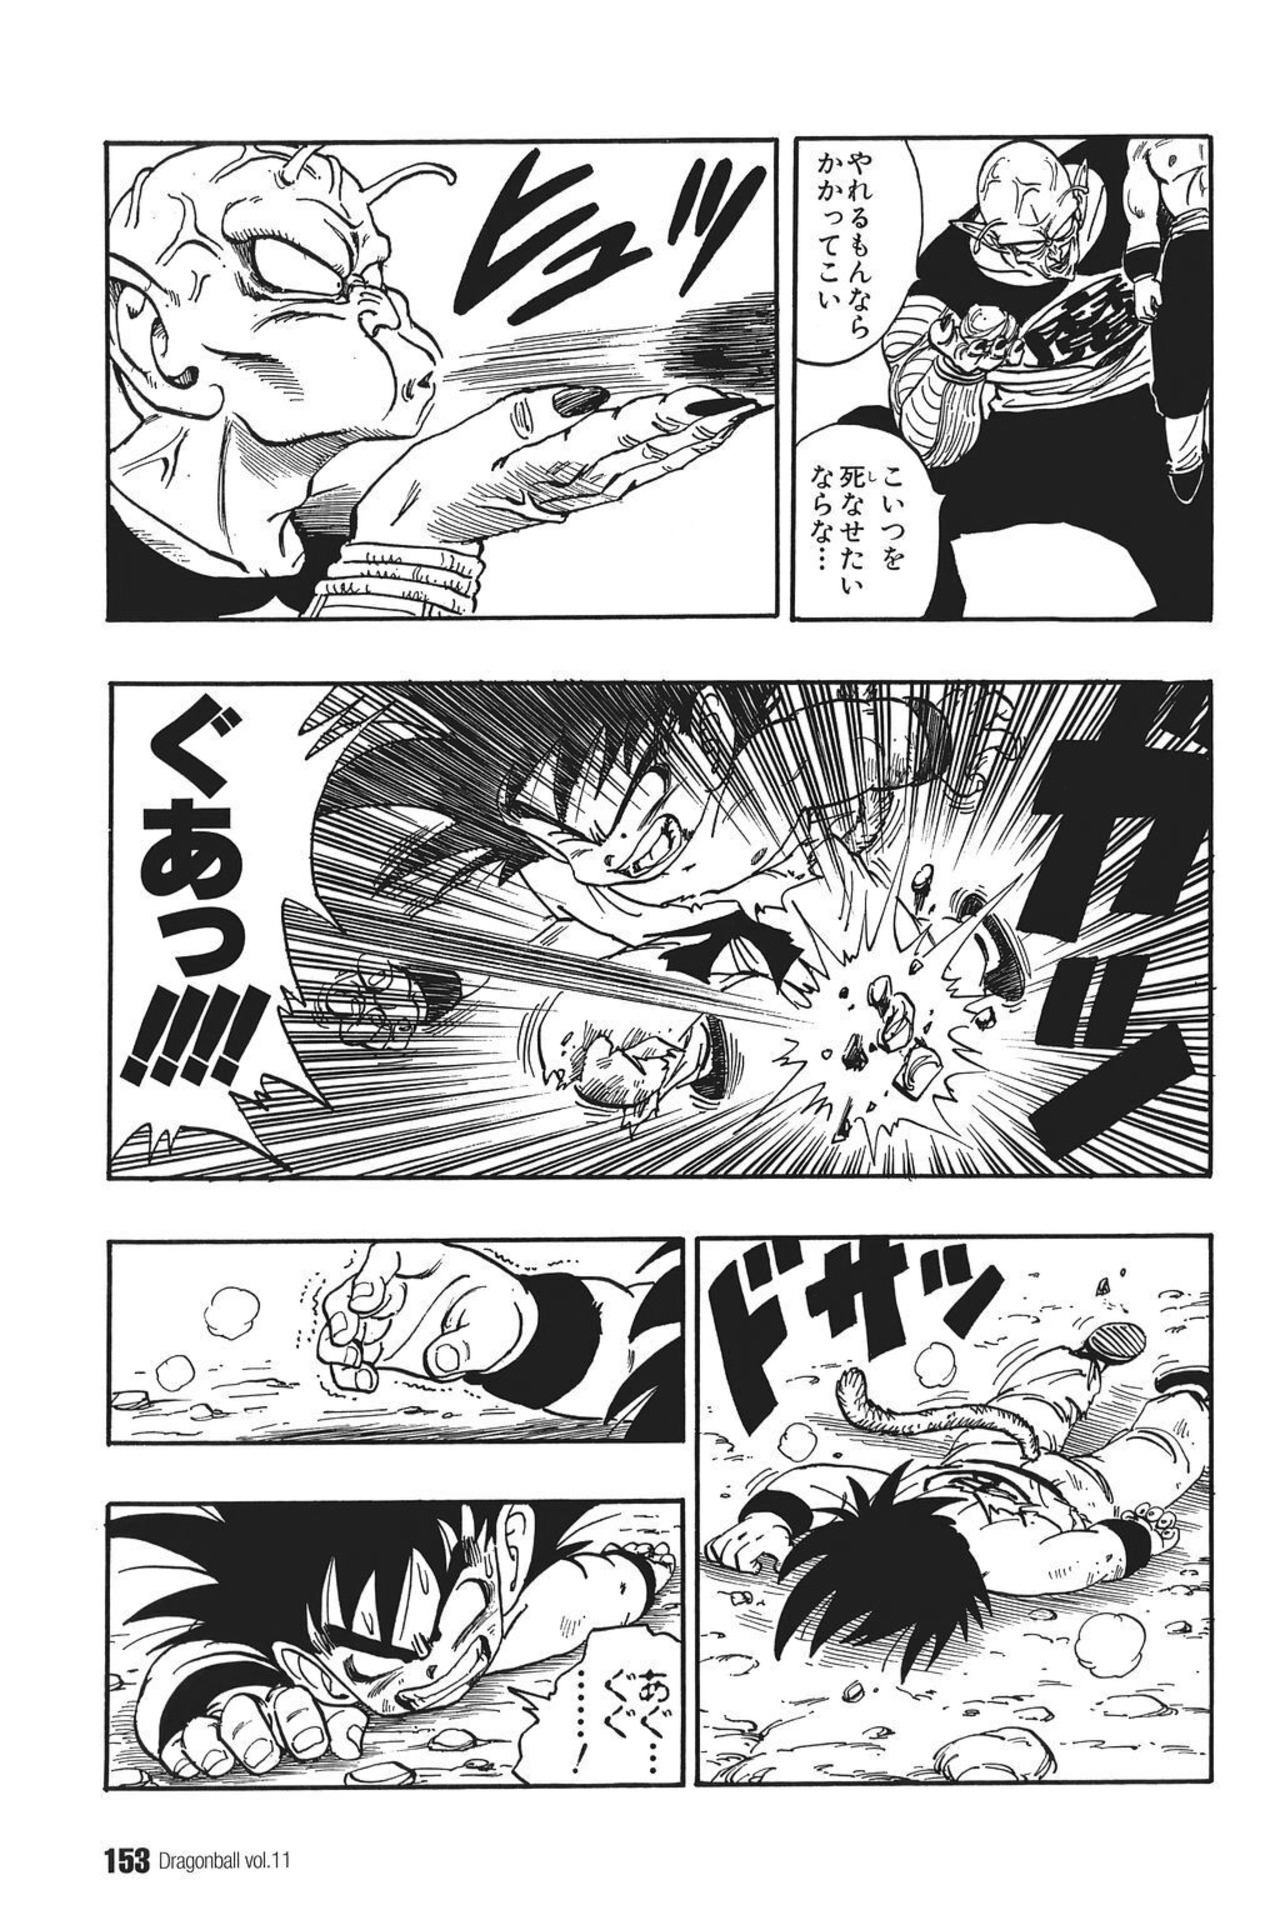 goku naruto ichigo and luffy vs scp 682 avater - Battles - Comic Vine